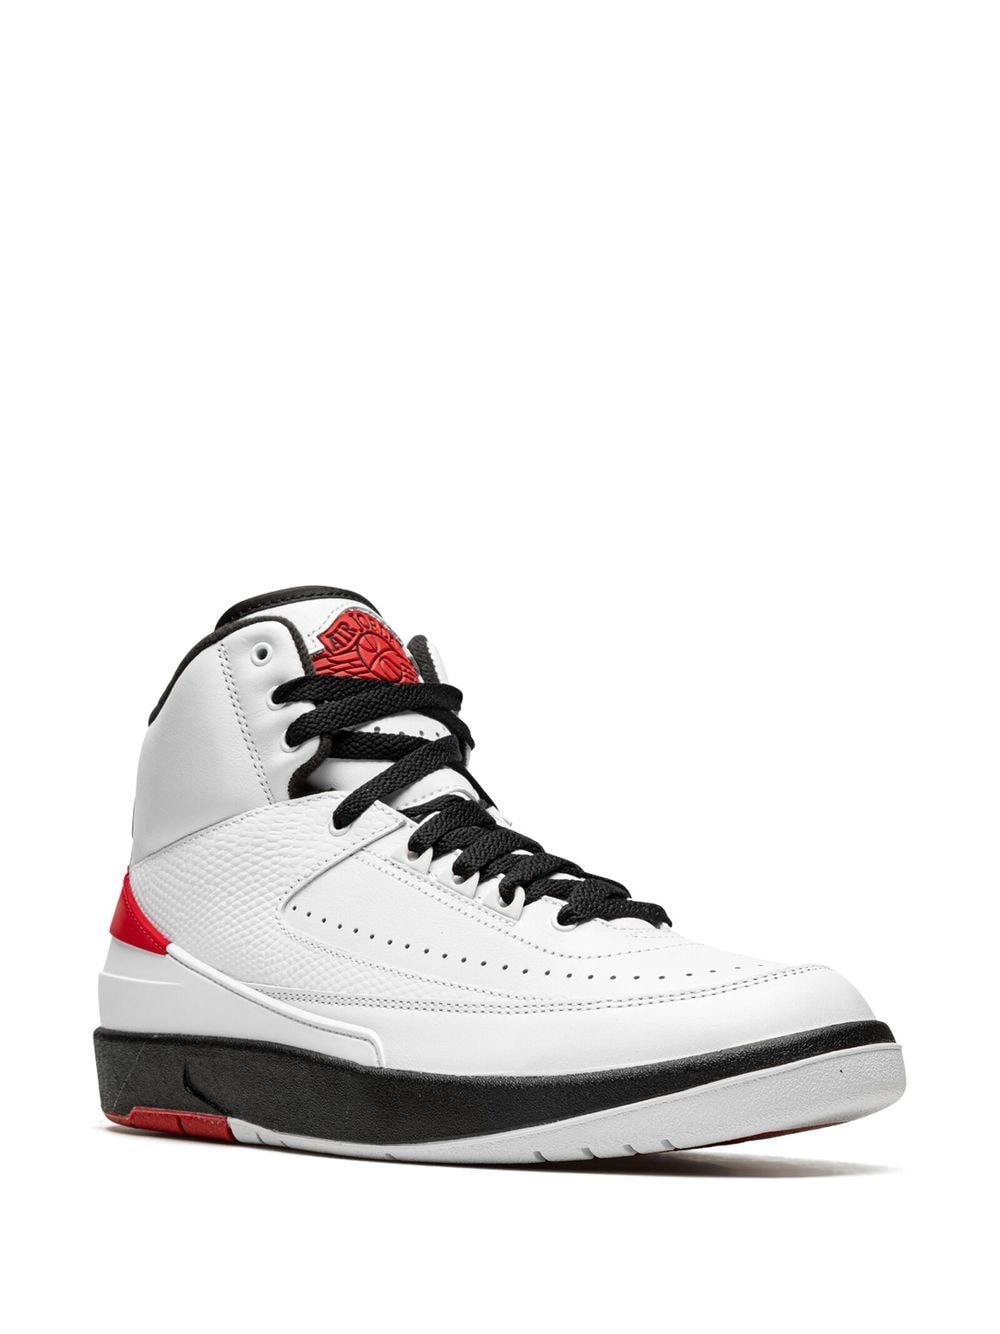 Air Jordan 2 Retro OG Chicago 2022 sneakers